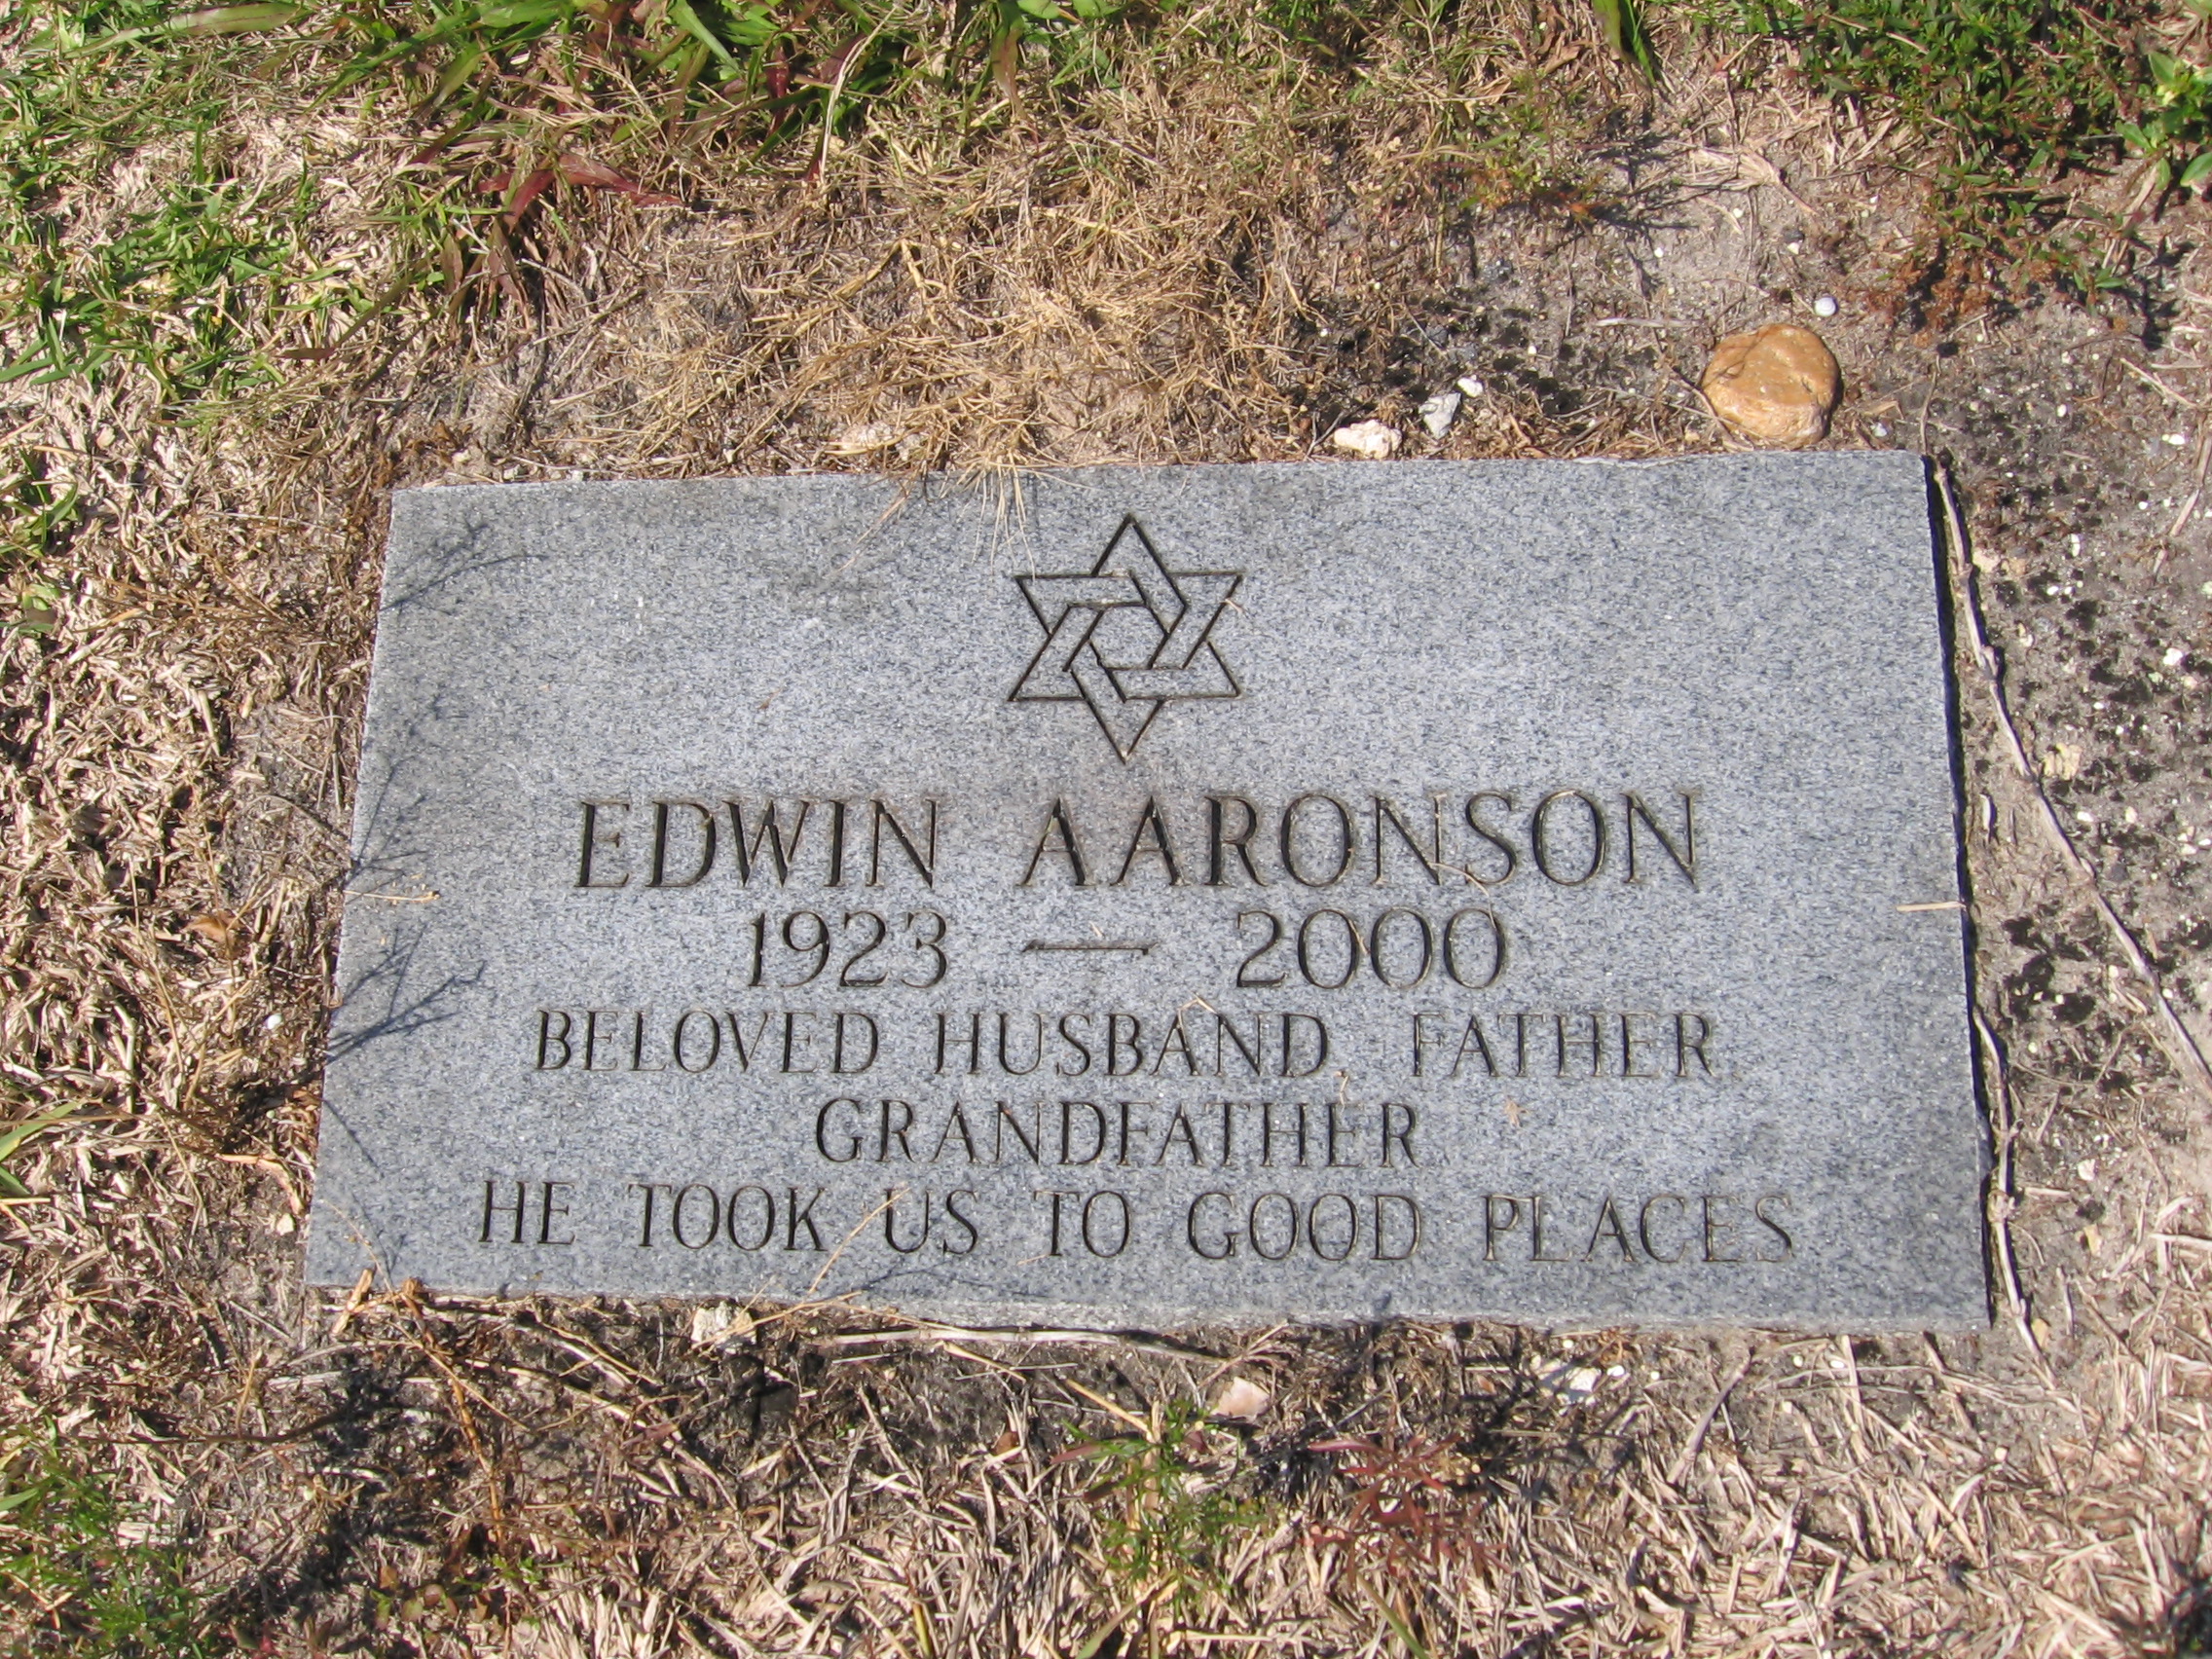 Edwin Aaronson